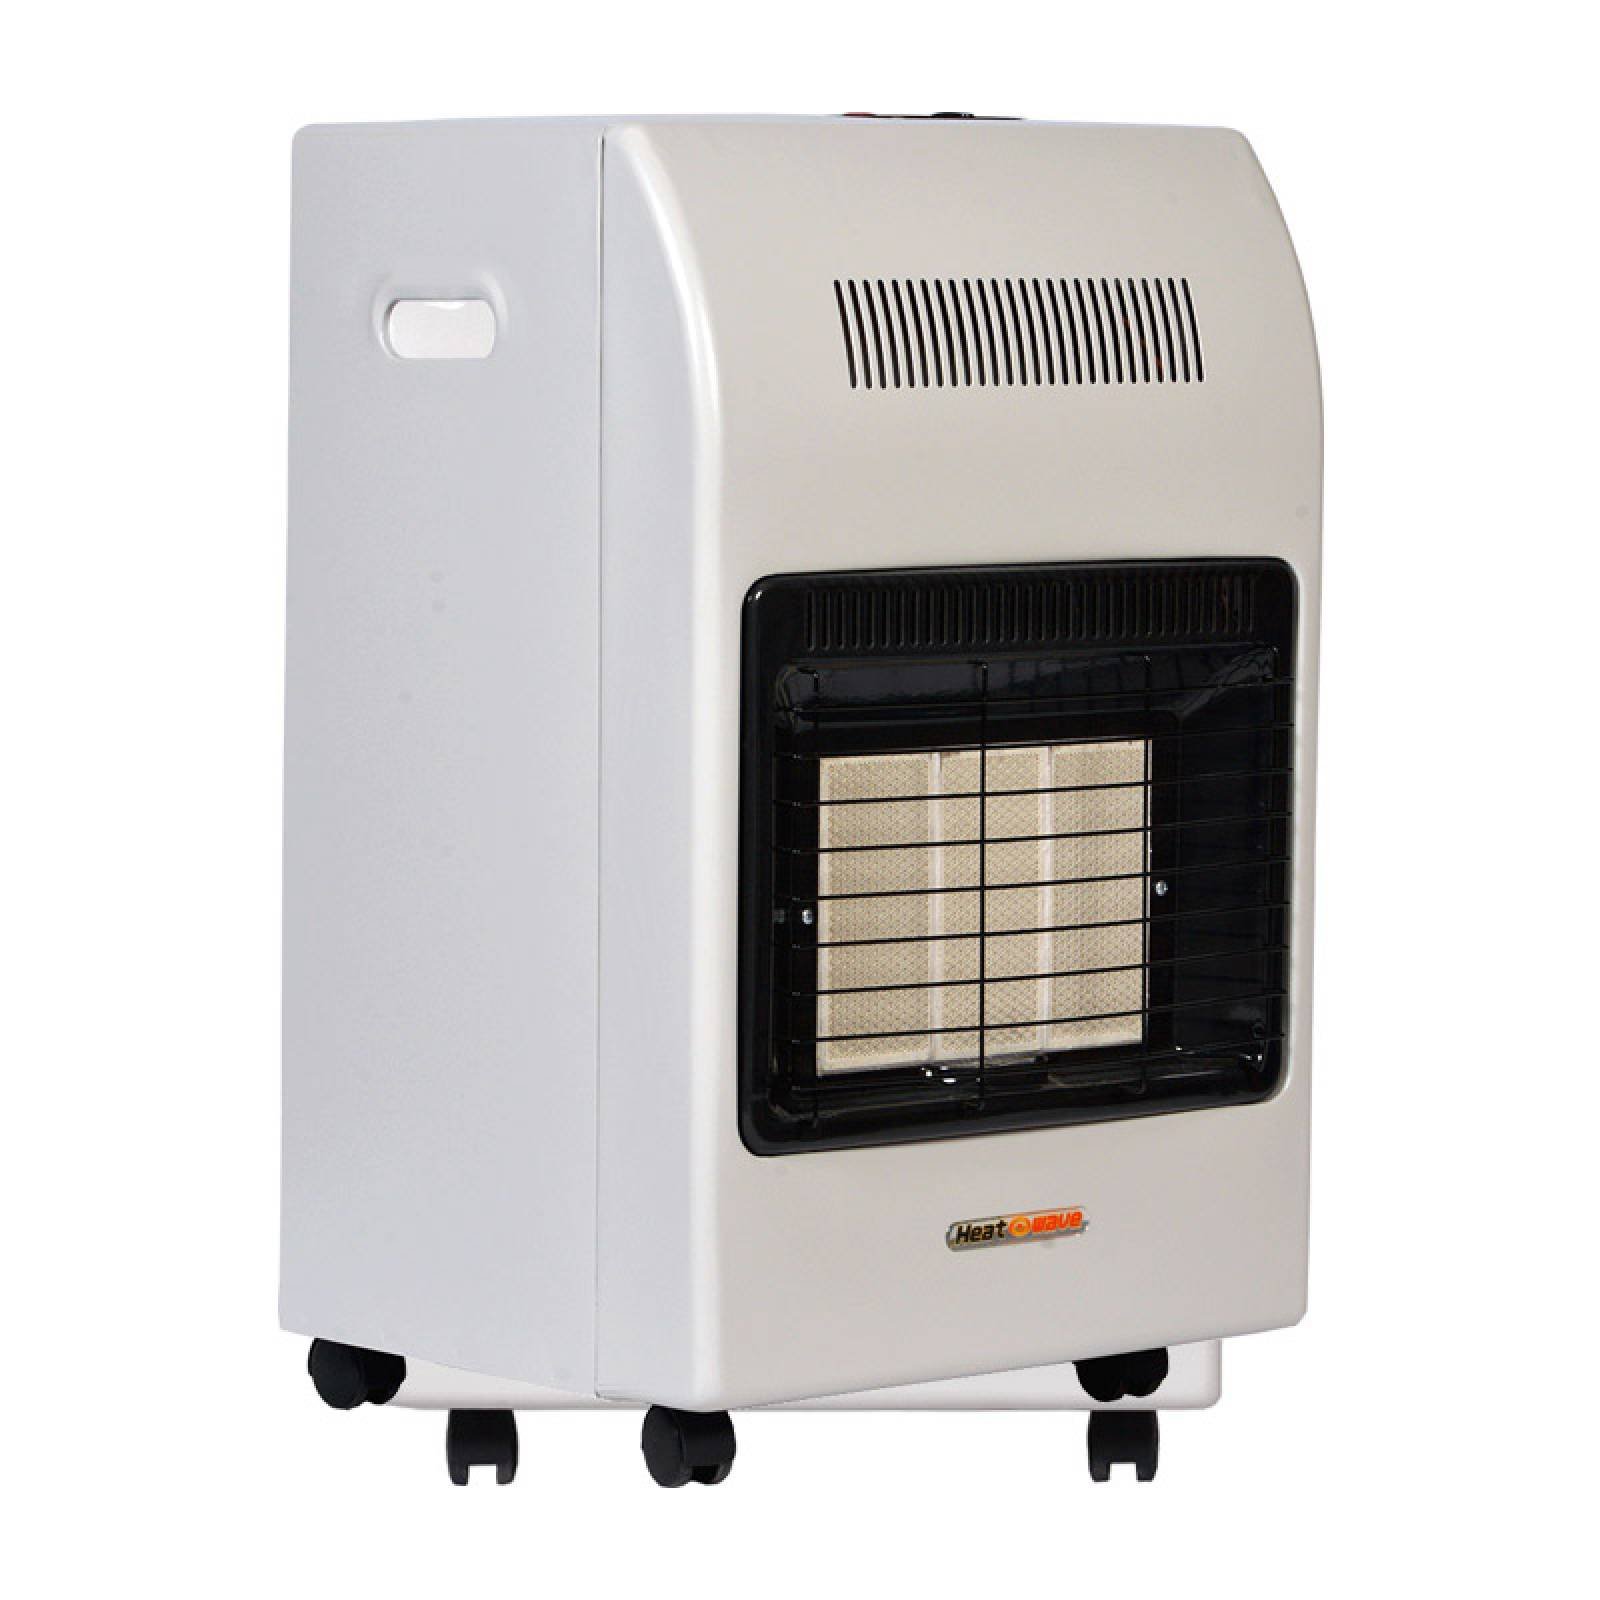 Calentador Calefactor Portatil de Gas LP 3 Radiantes Turbo Blanco HG3X-T Heat Wave 